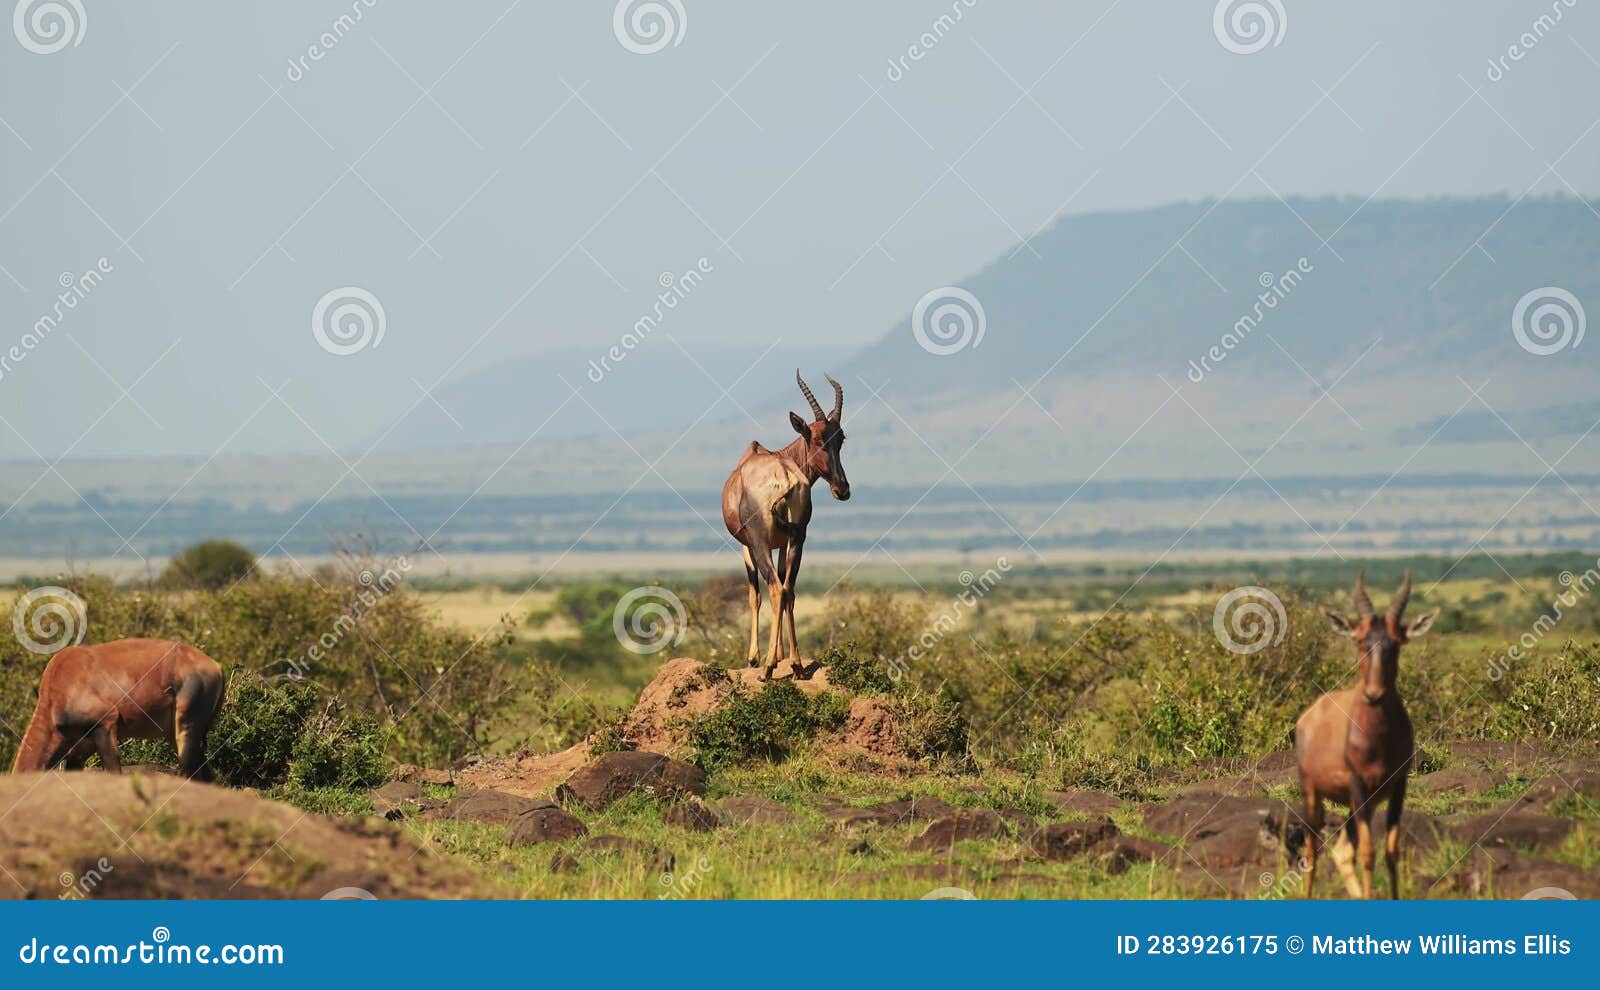 Topi, Africa Wildlife of Kenya Animal in Beautiful Landscape Scenery in ...